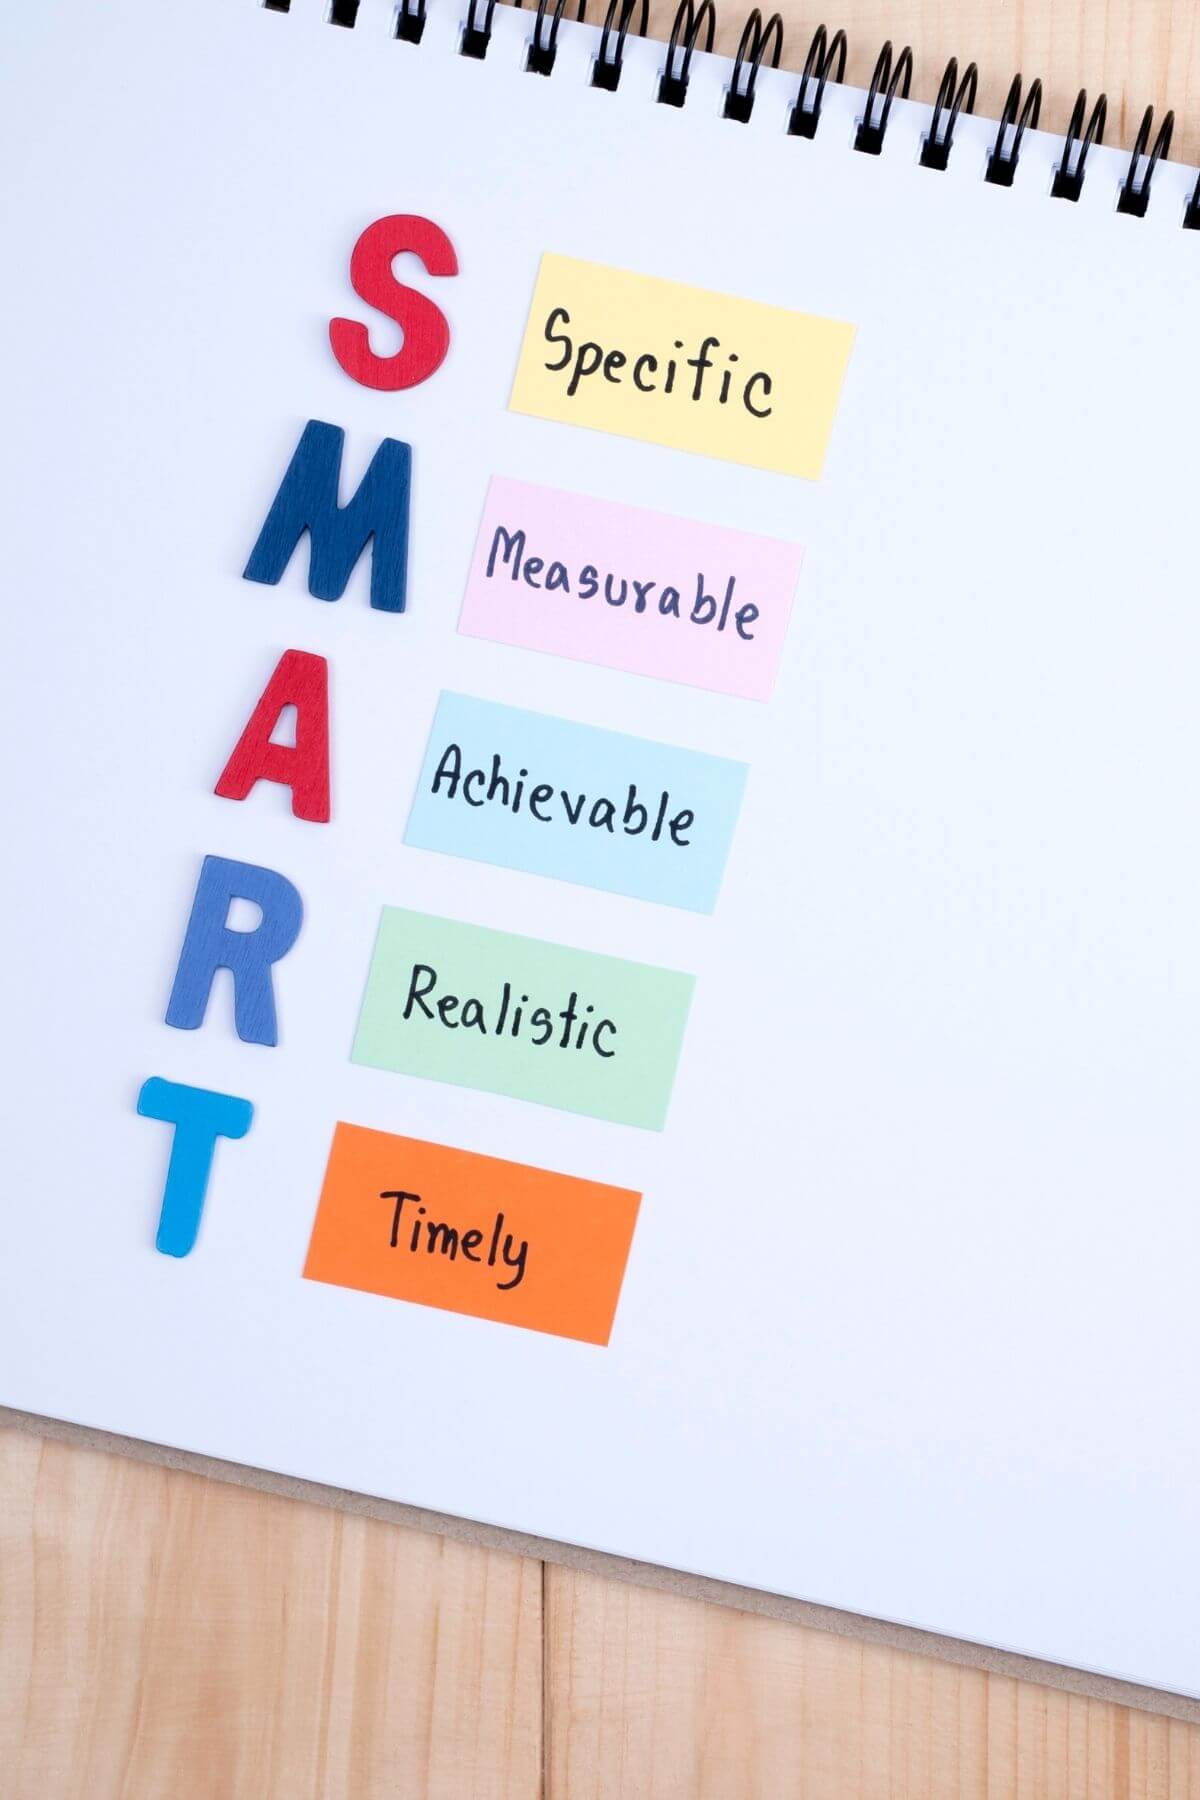 Smart goals written out as acronym